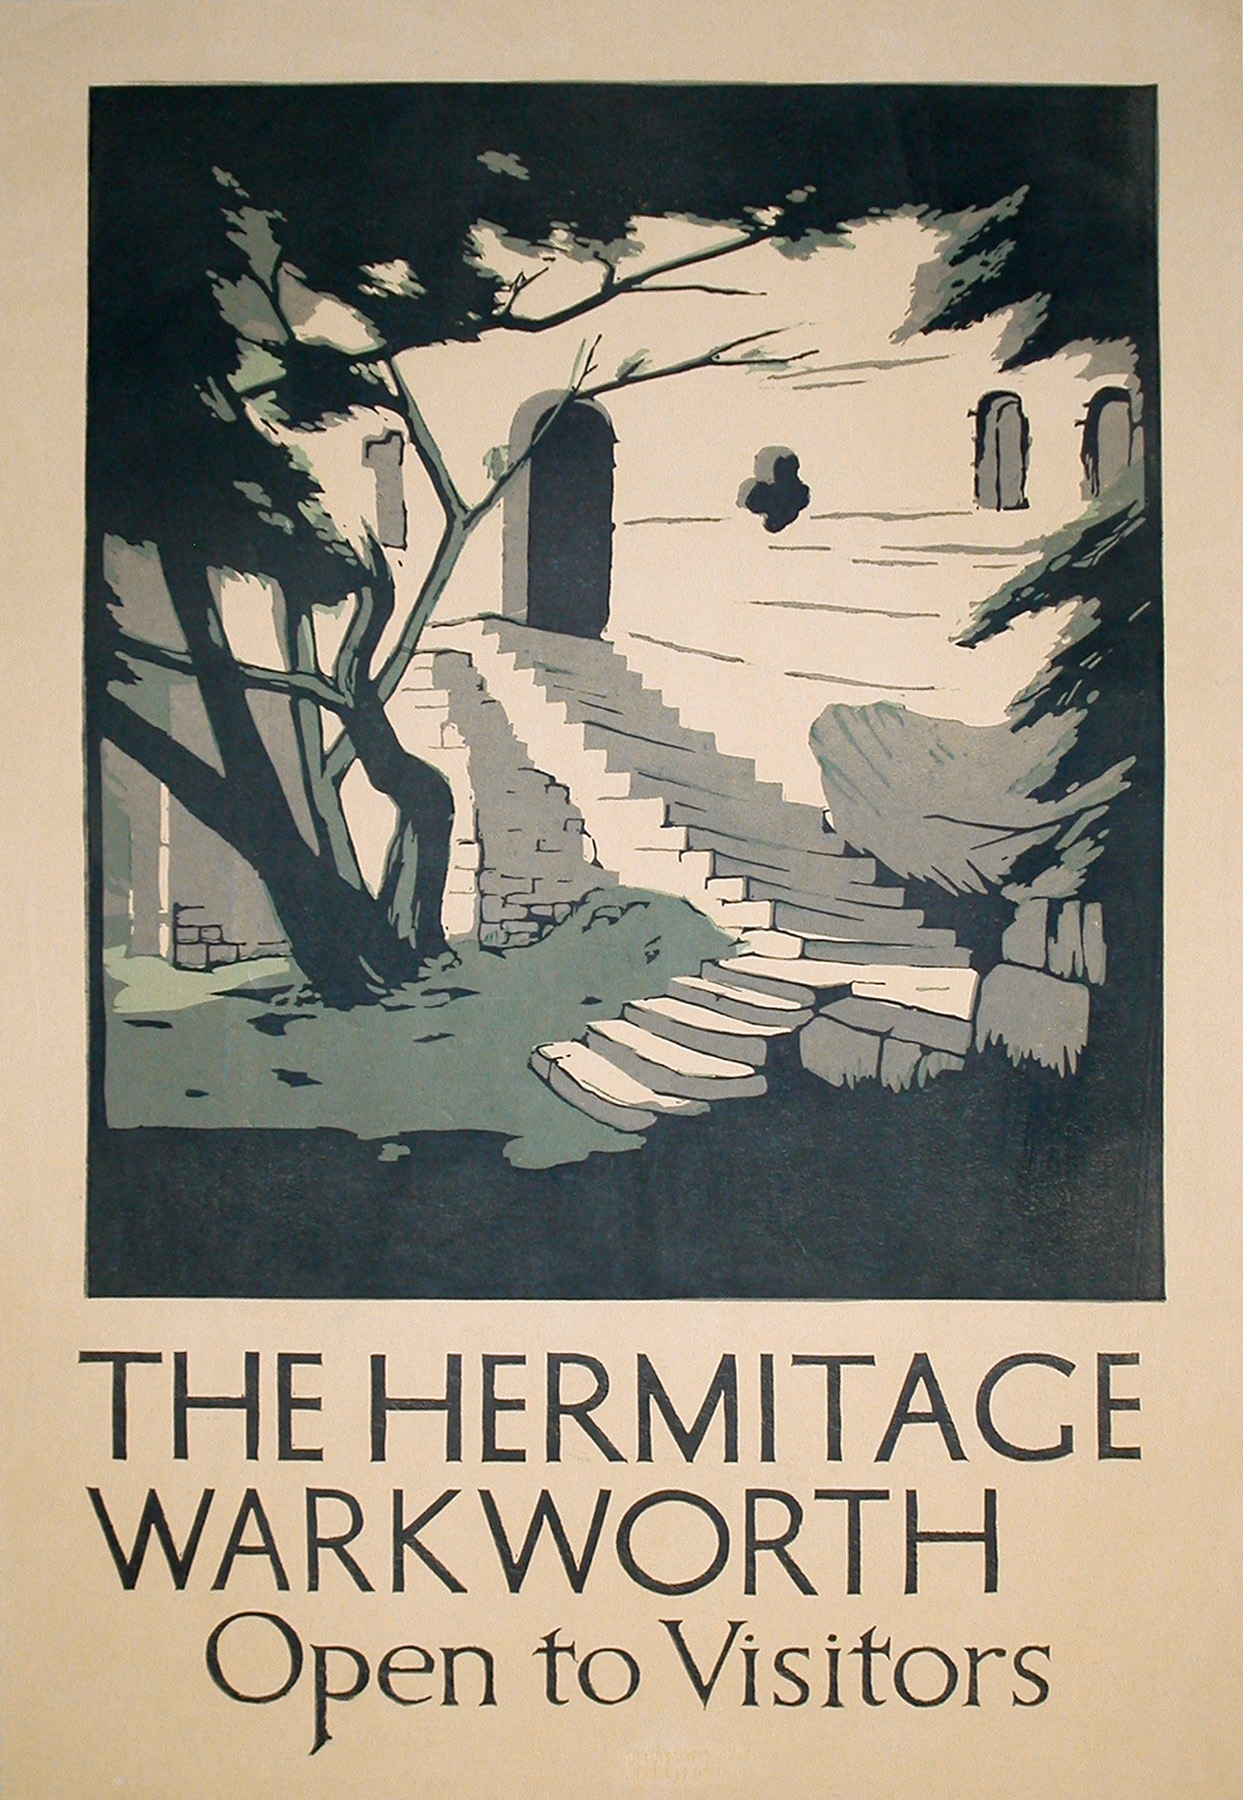 The Hermitage Workworth